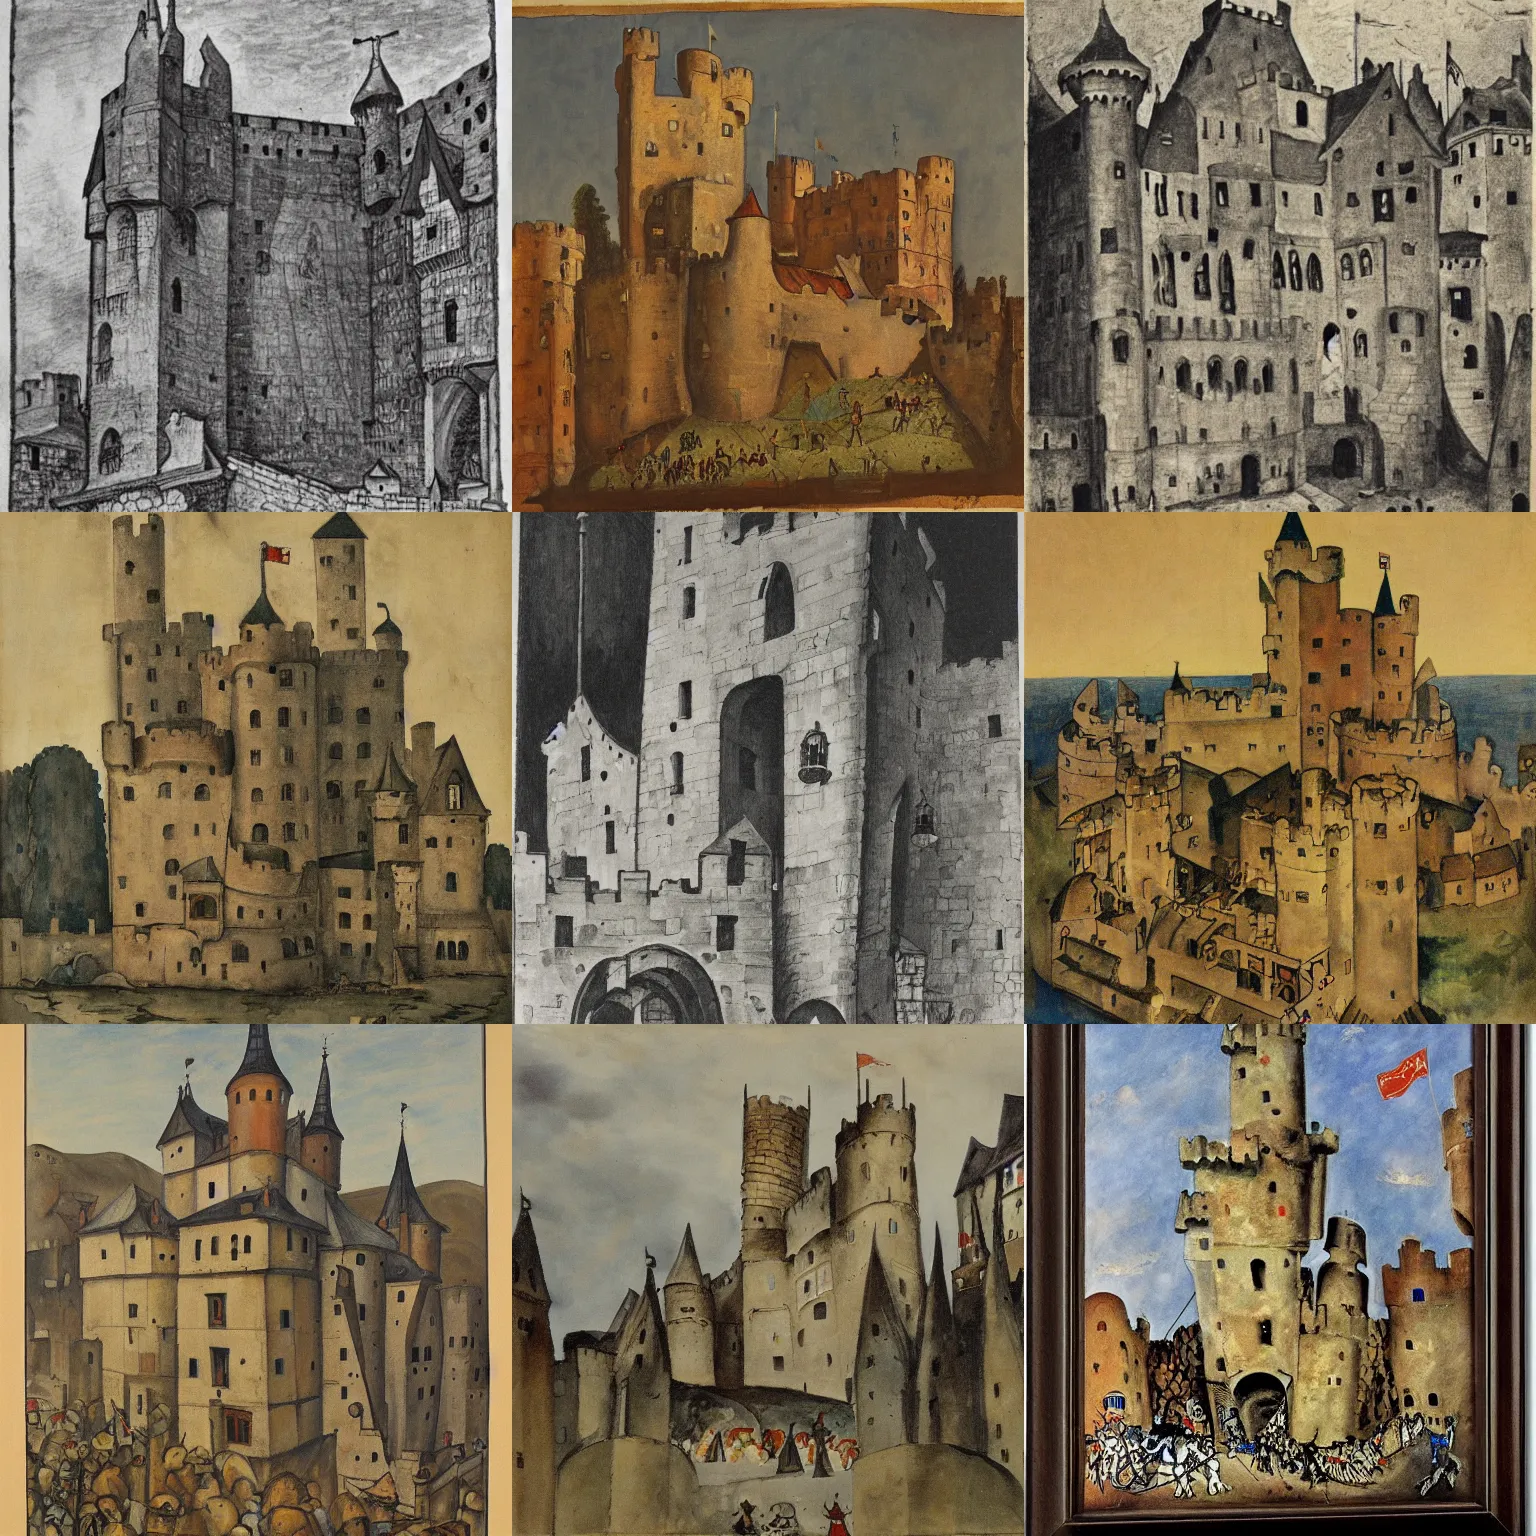 Prompt: medieval castle, by george grosz